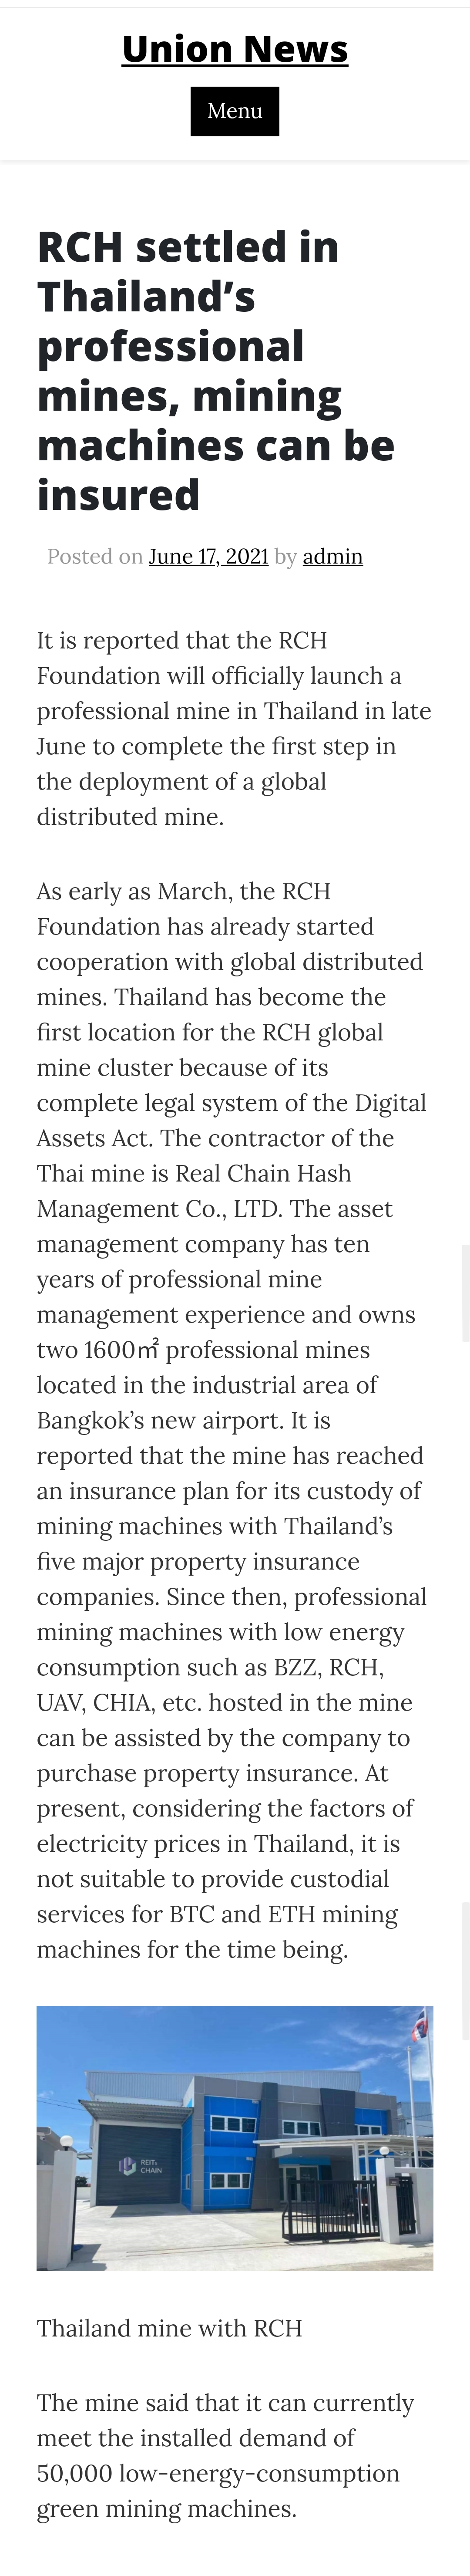 RCH入驻泰国专业矿场，矿机可承保